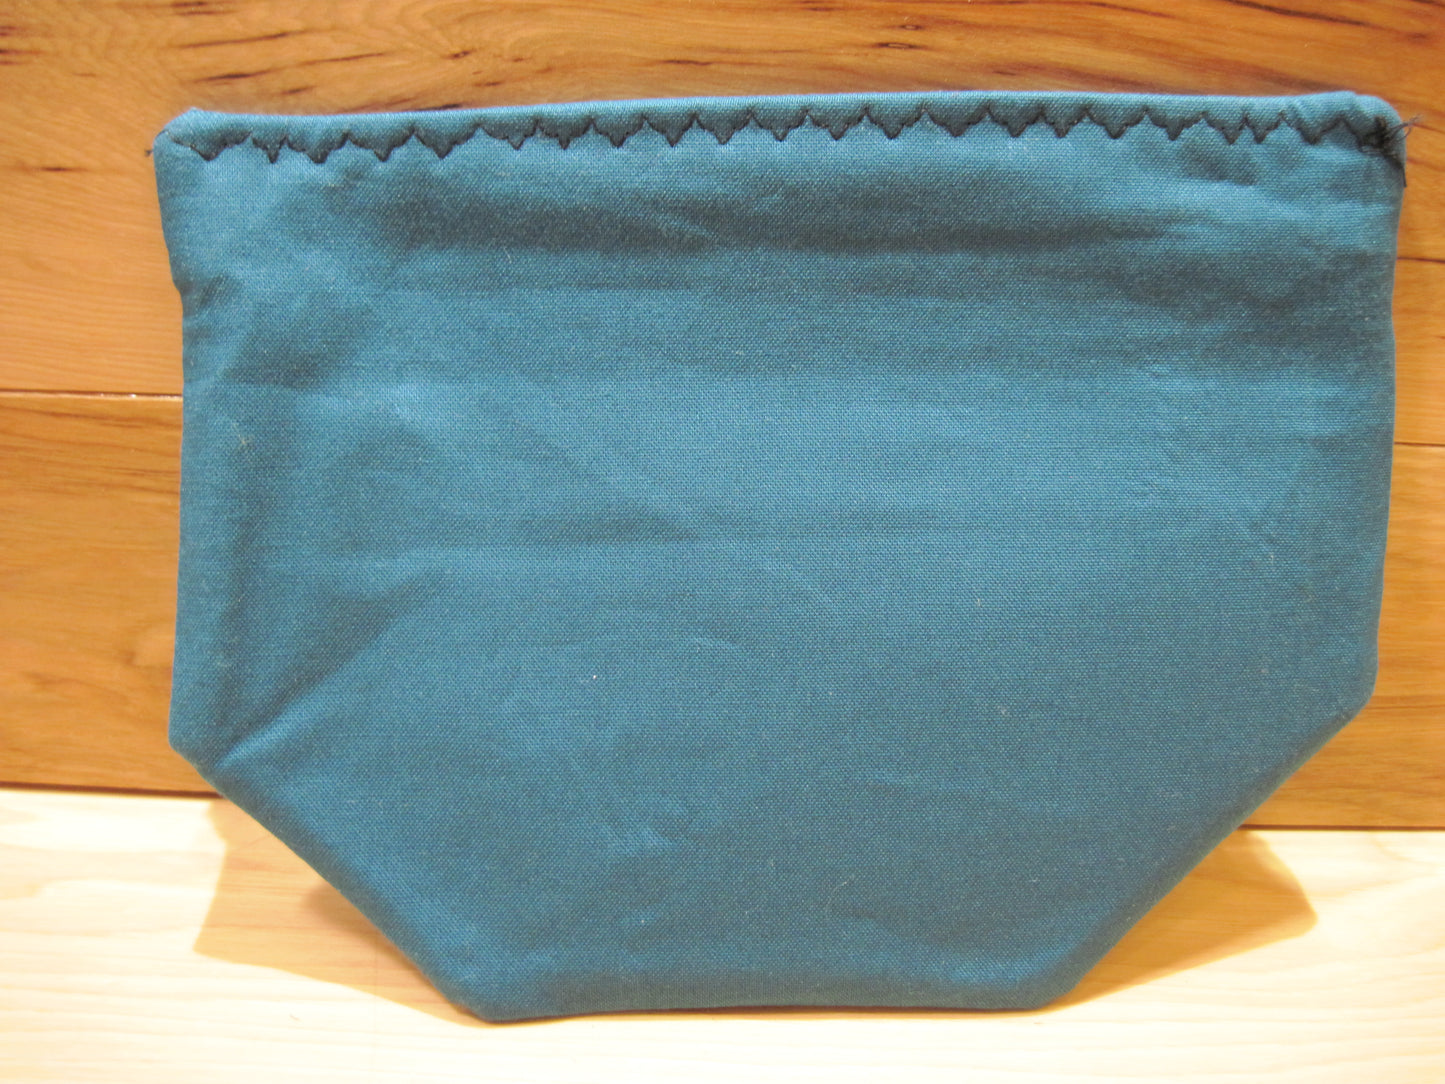 Notions Bag Ravenclaw House w/ blue zipper